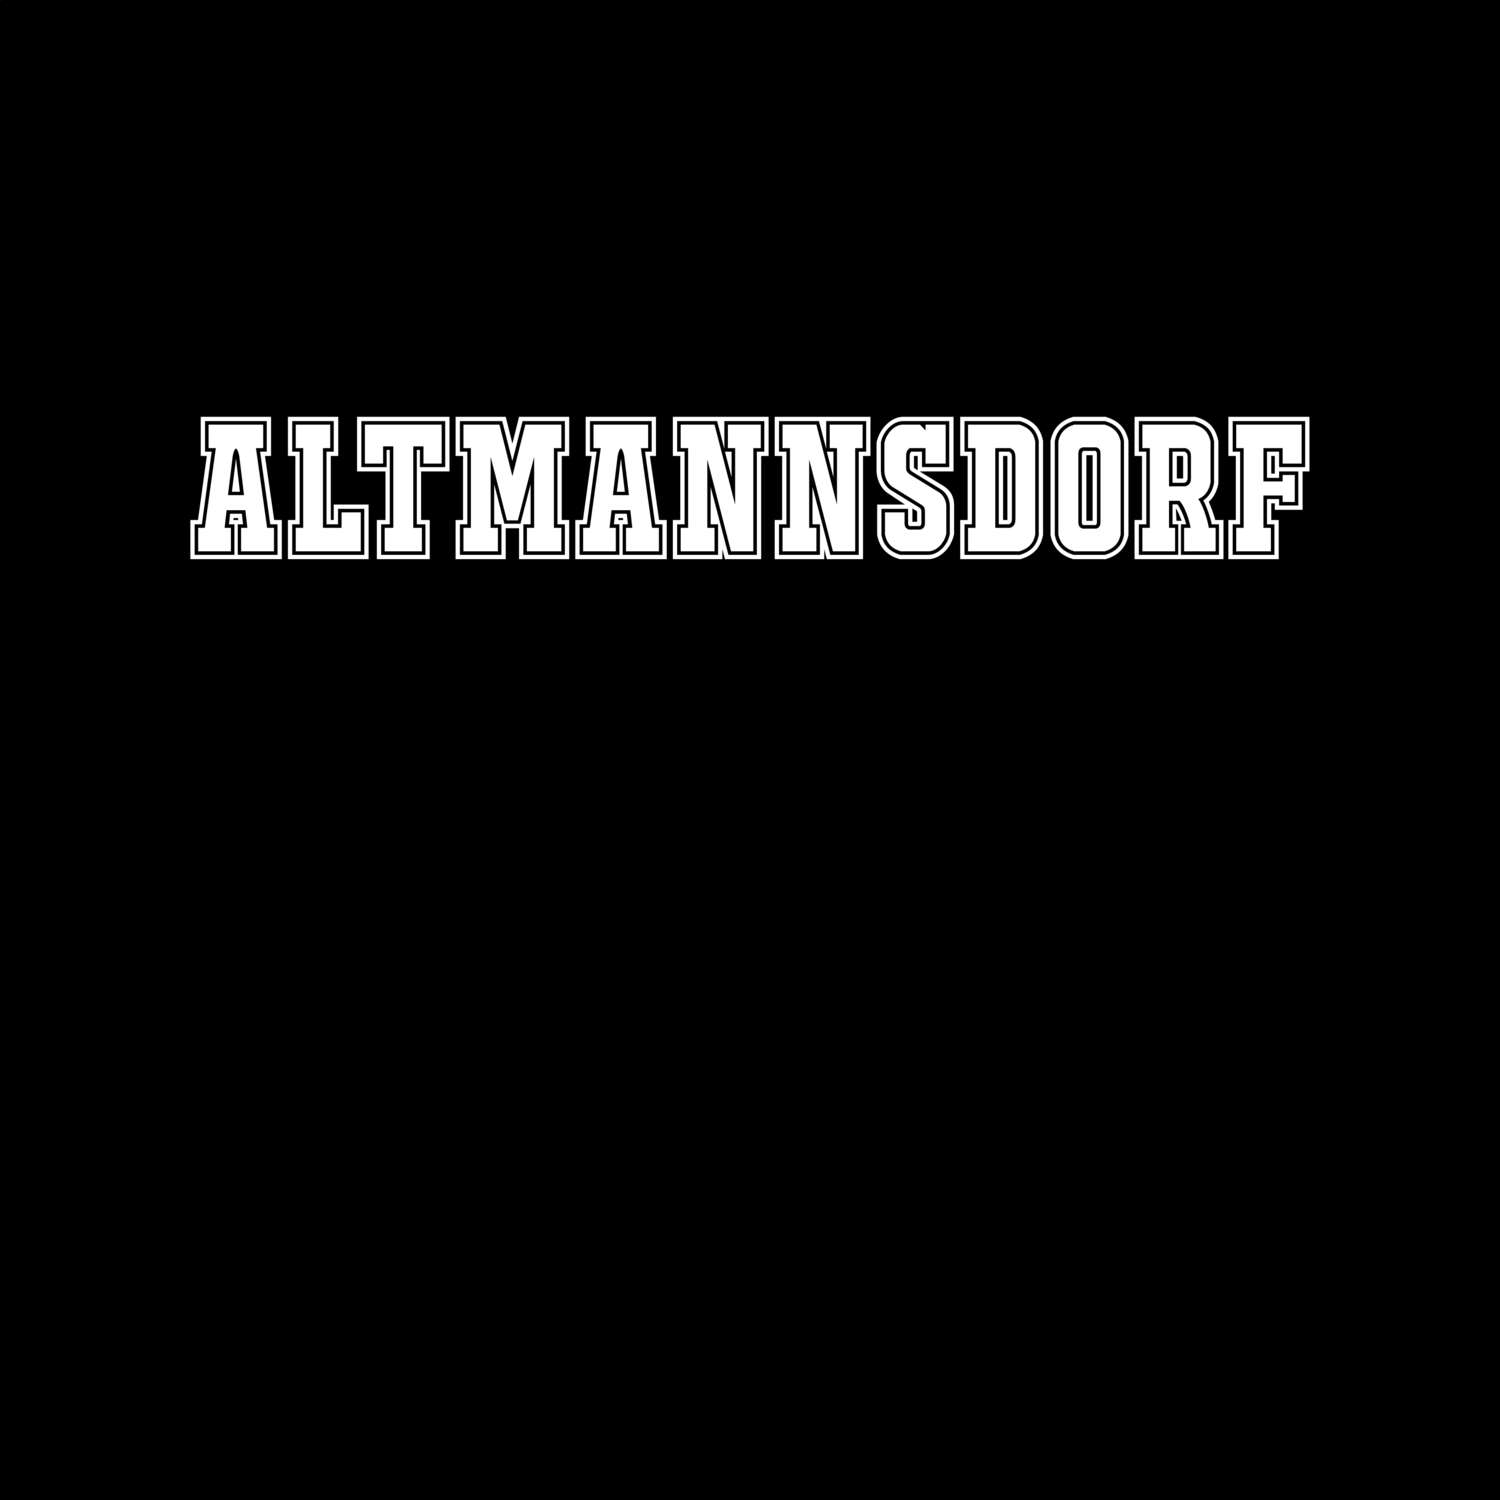 Altmannsdorf T-Shirt »Classic«